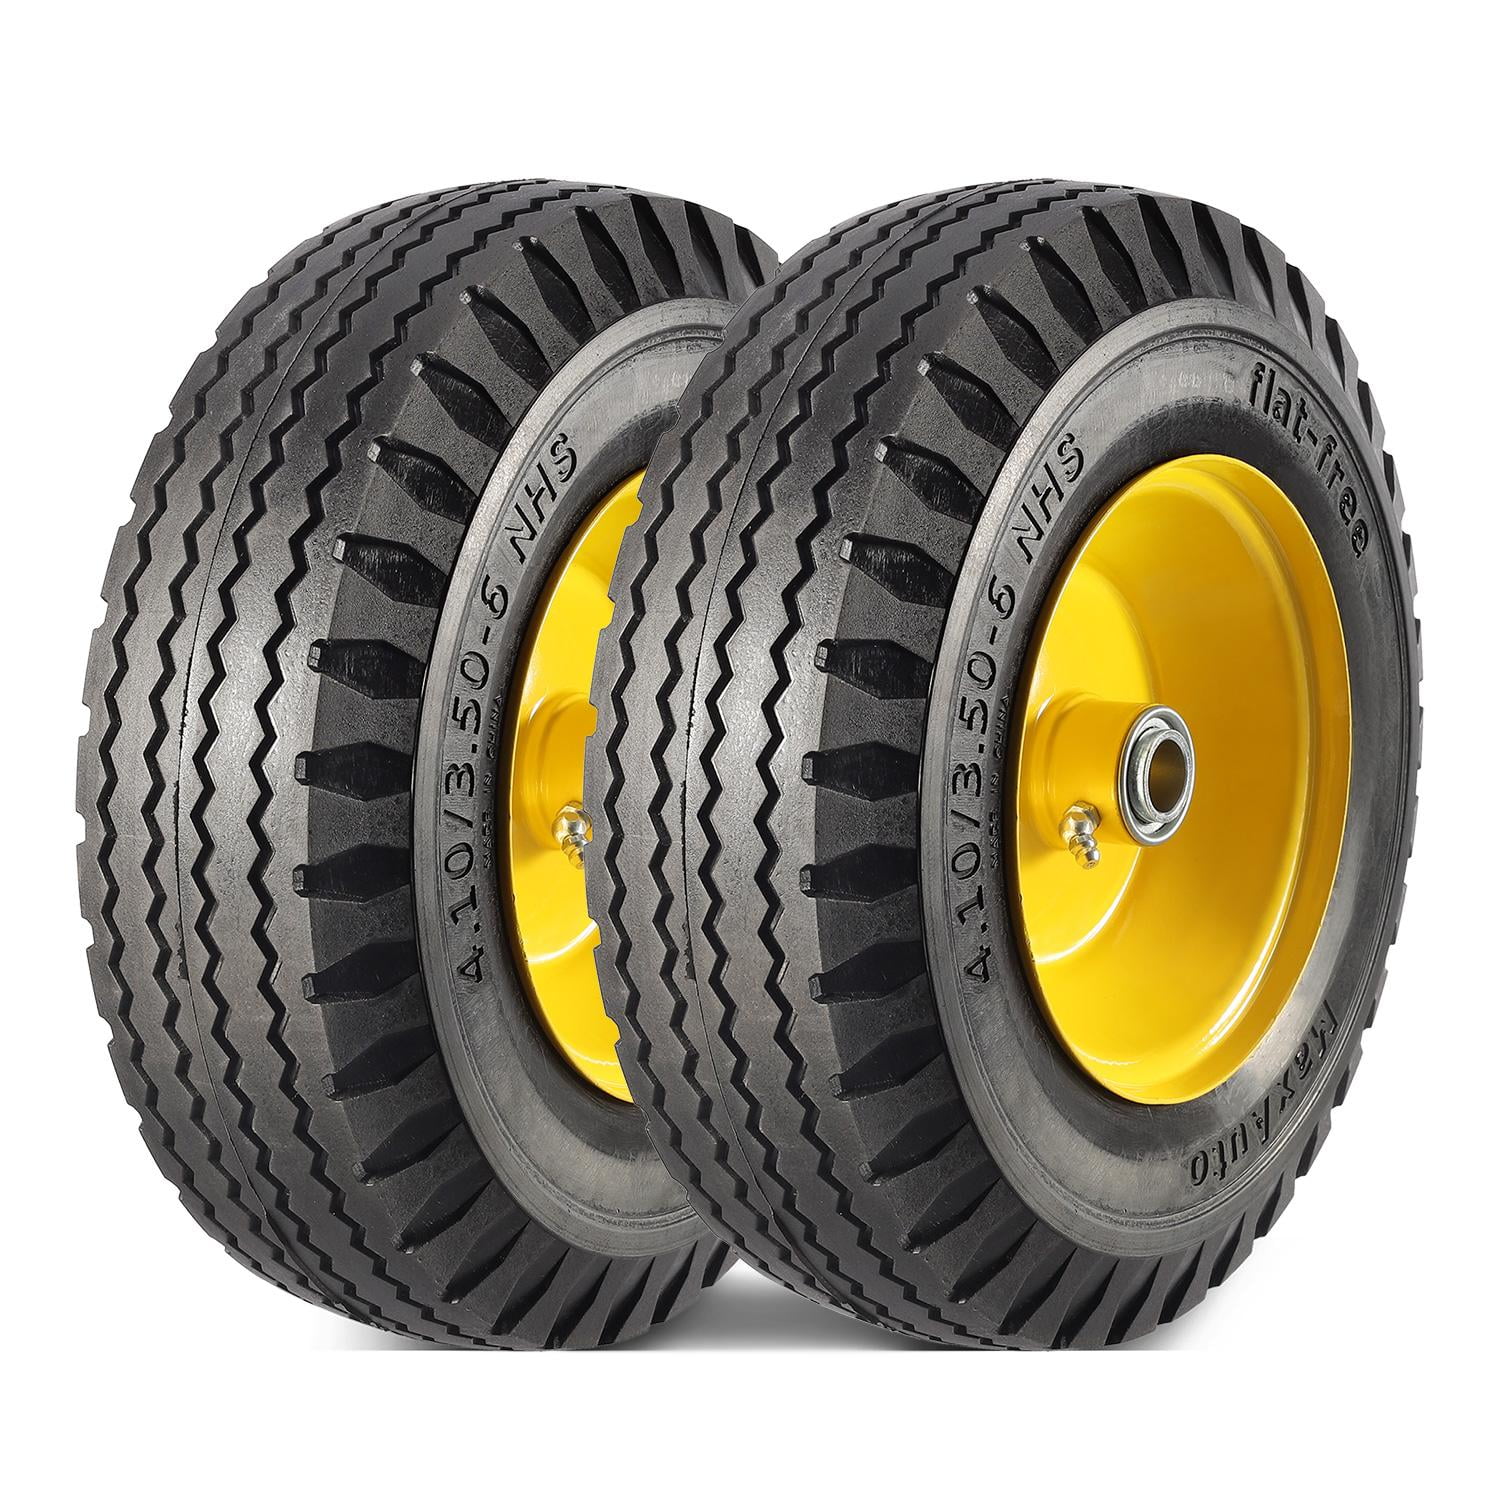 2-PK-Set New 10" 4.10/3.50-4 Flat-Free Sawtooth Tires w/Steel Rim for Handtruc 